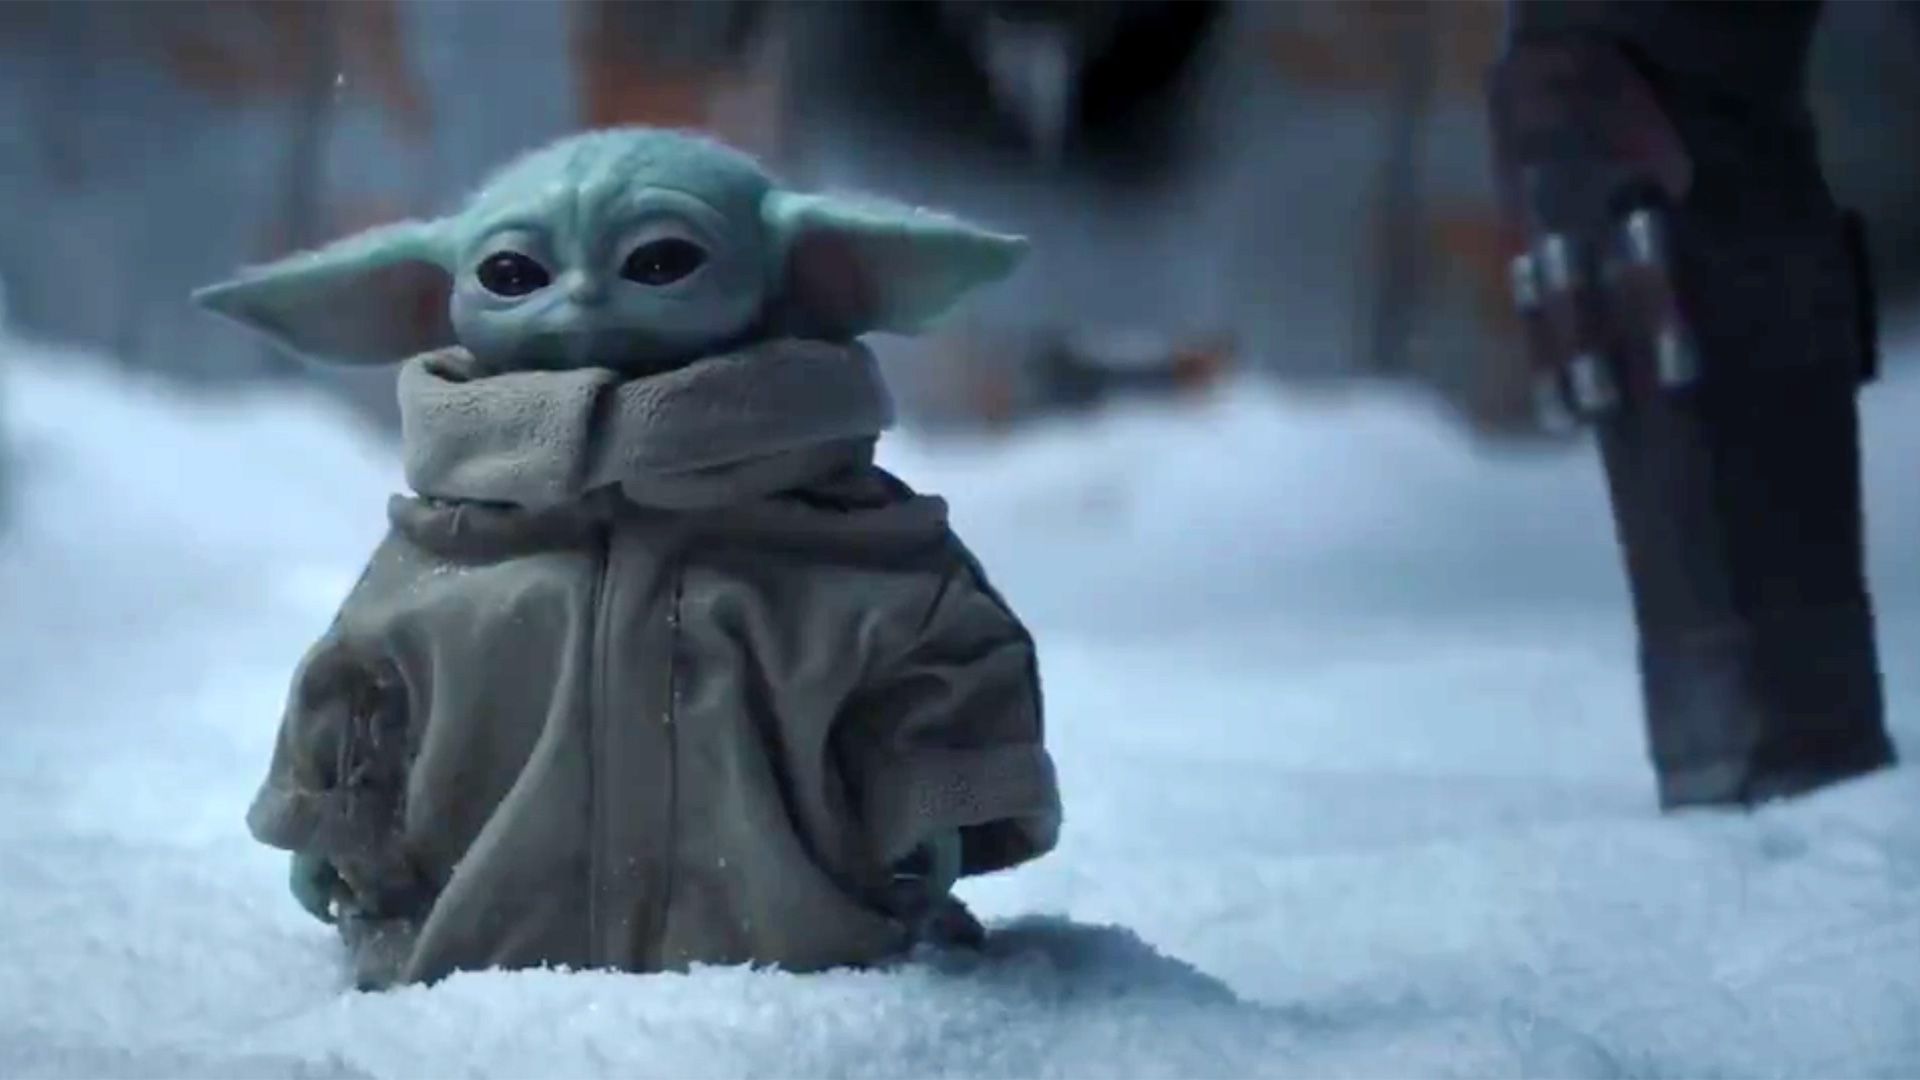 The Mandalorian season 2 trailer shows the search for Baby Yoda's home